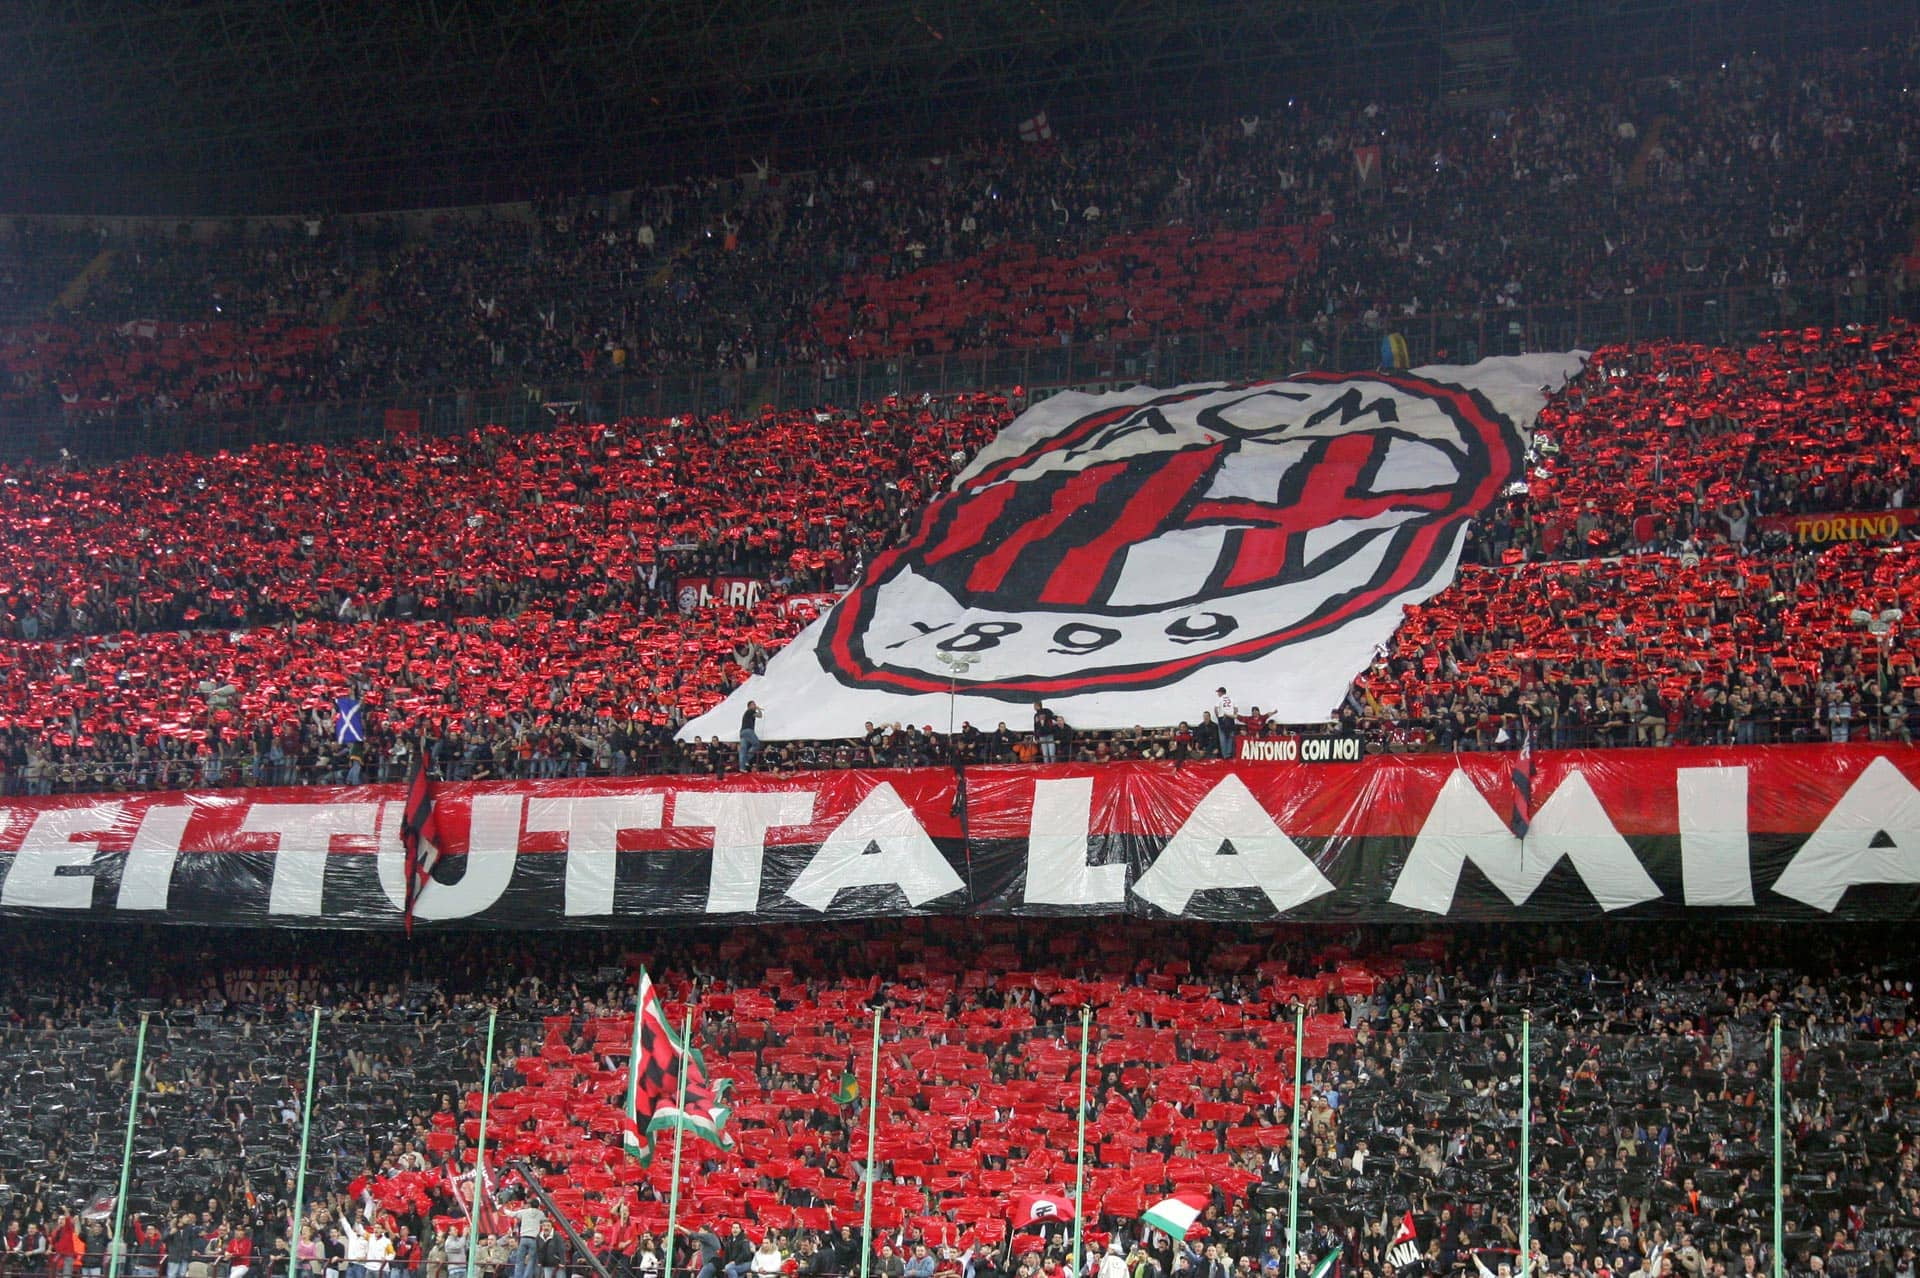  AC Milan - Cagliari, 7 mayoen 0:00